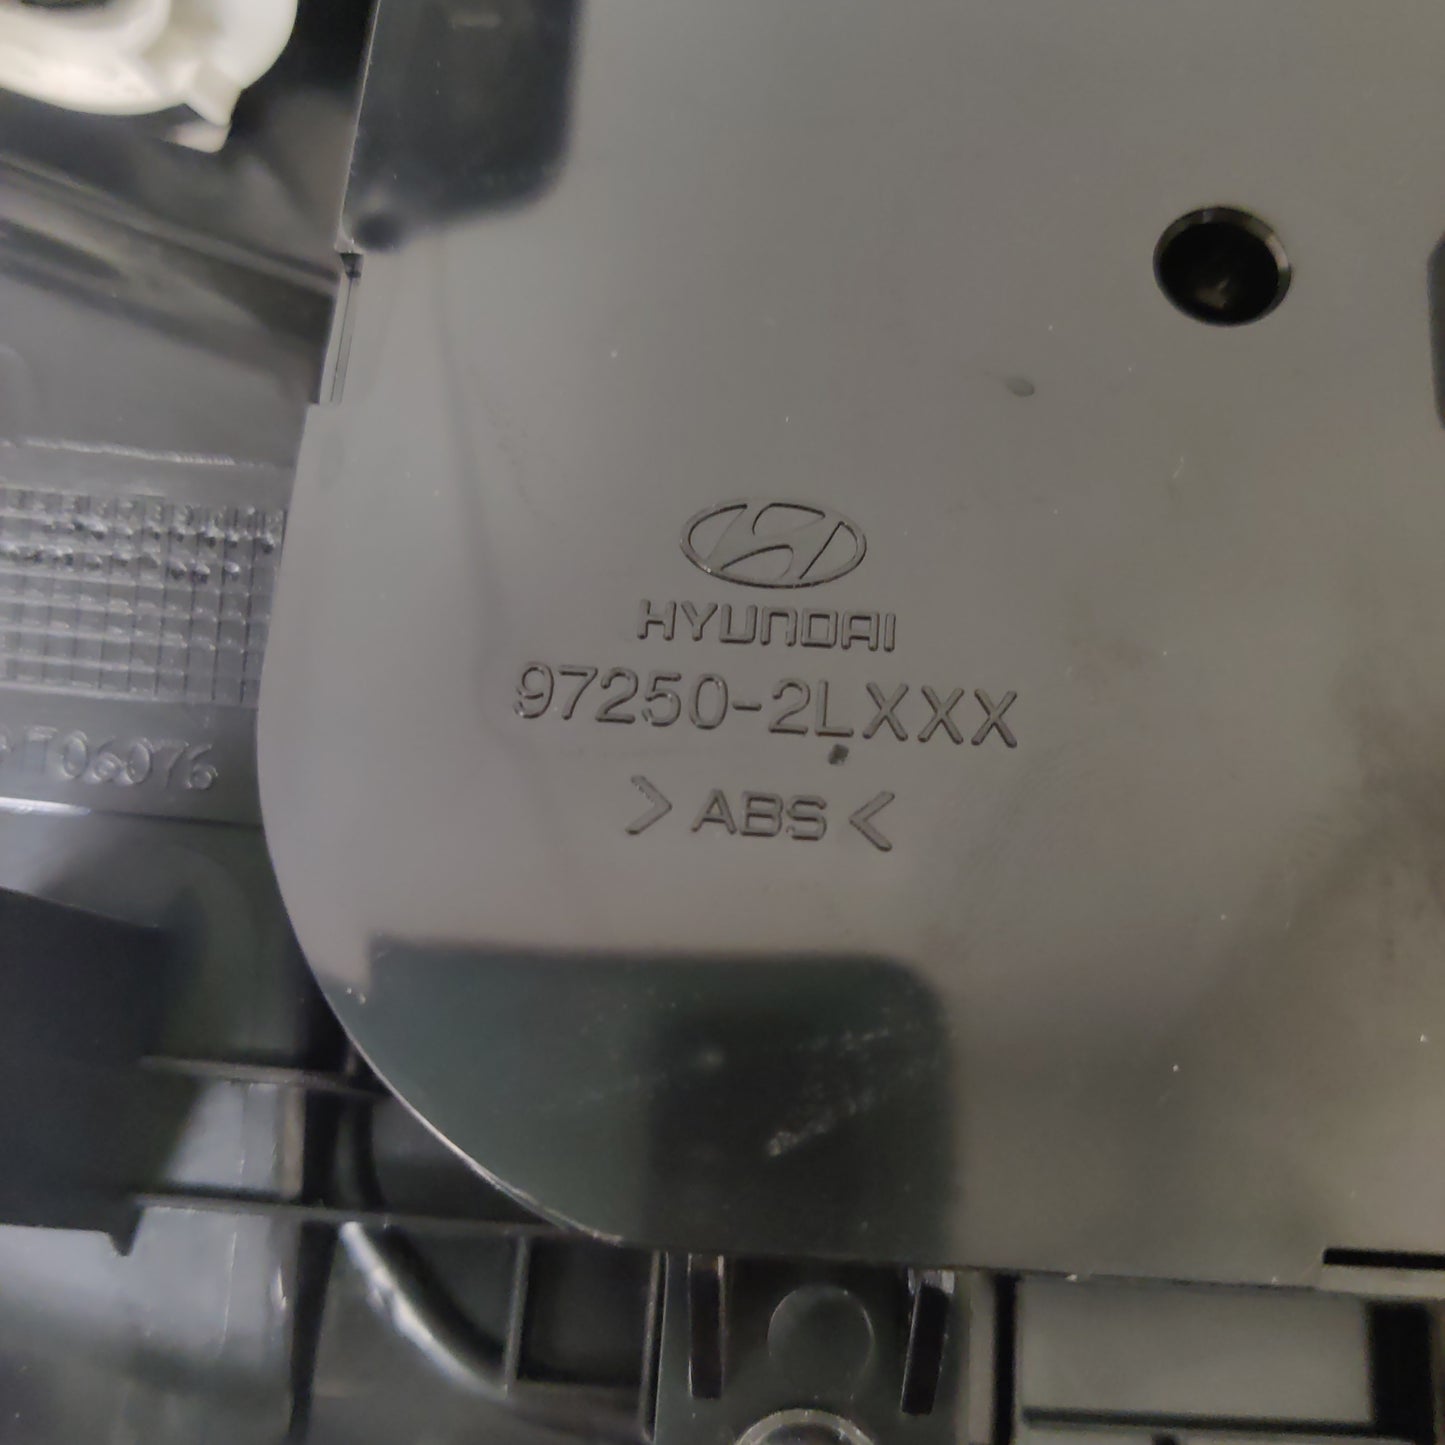 Lämmittimen säädin, Hyundai i30 cw 1.6 Farmari 2009, 97250-2LXXX